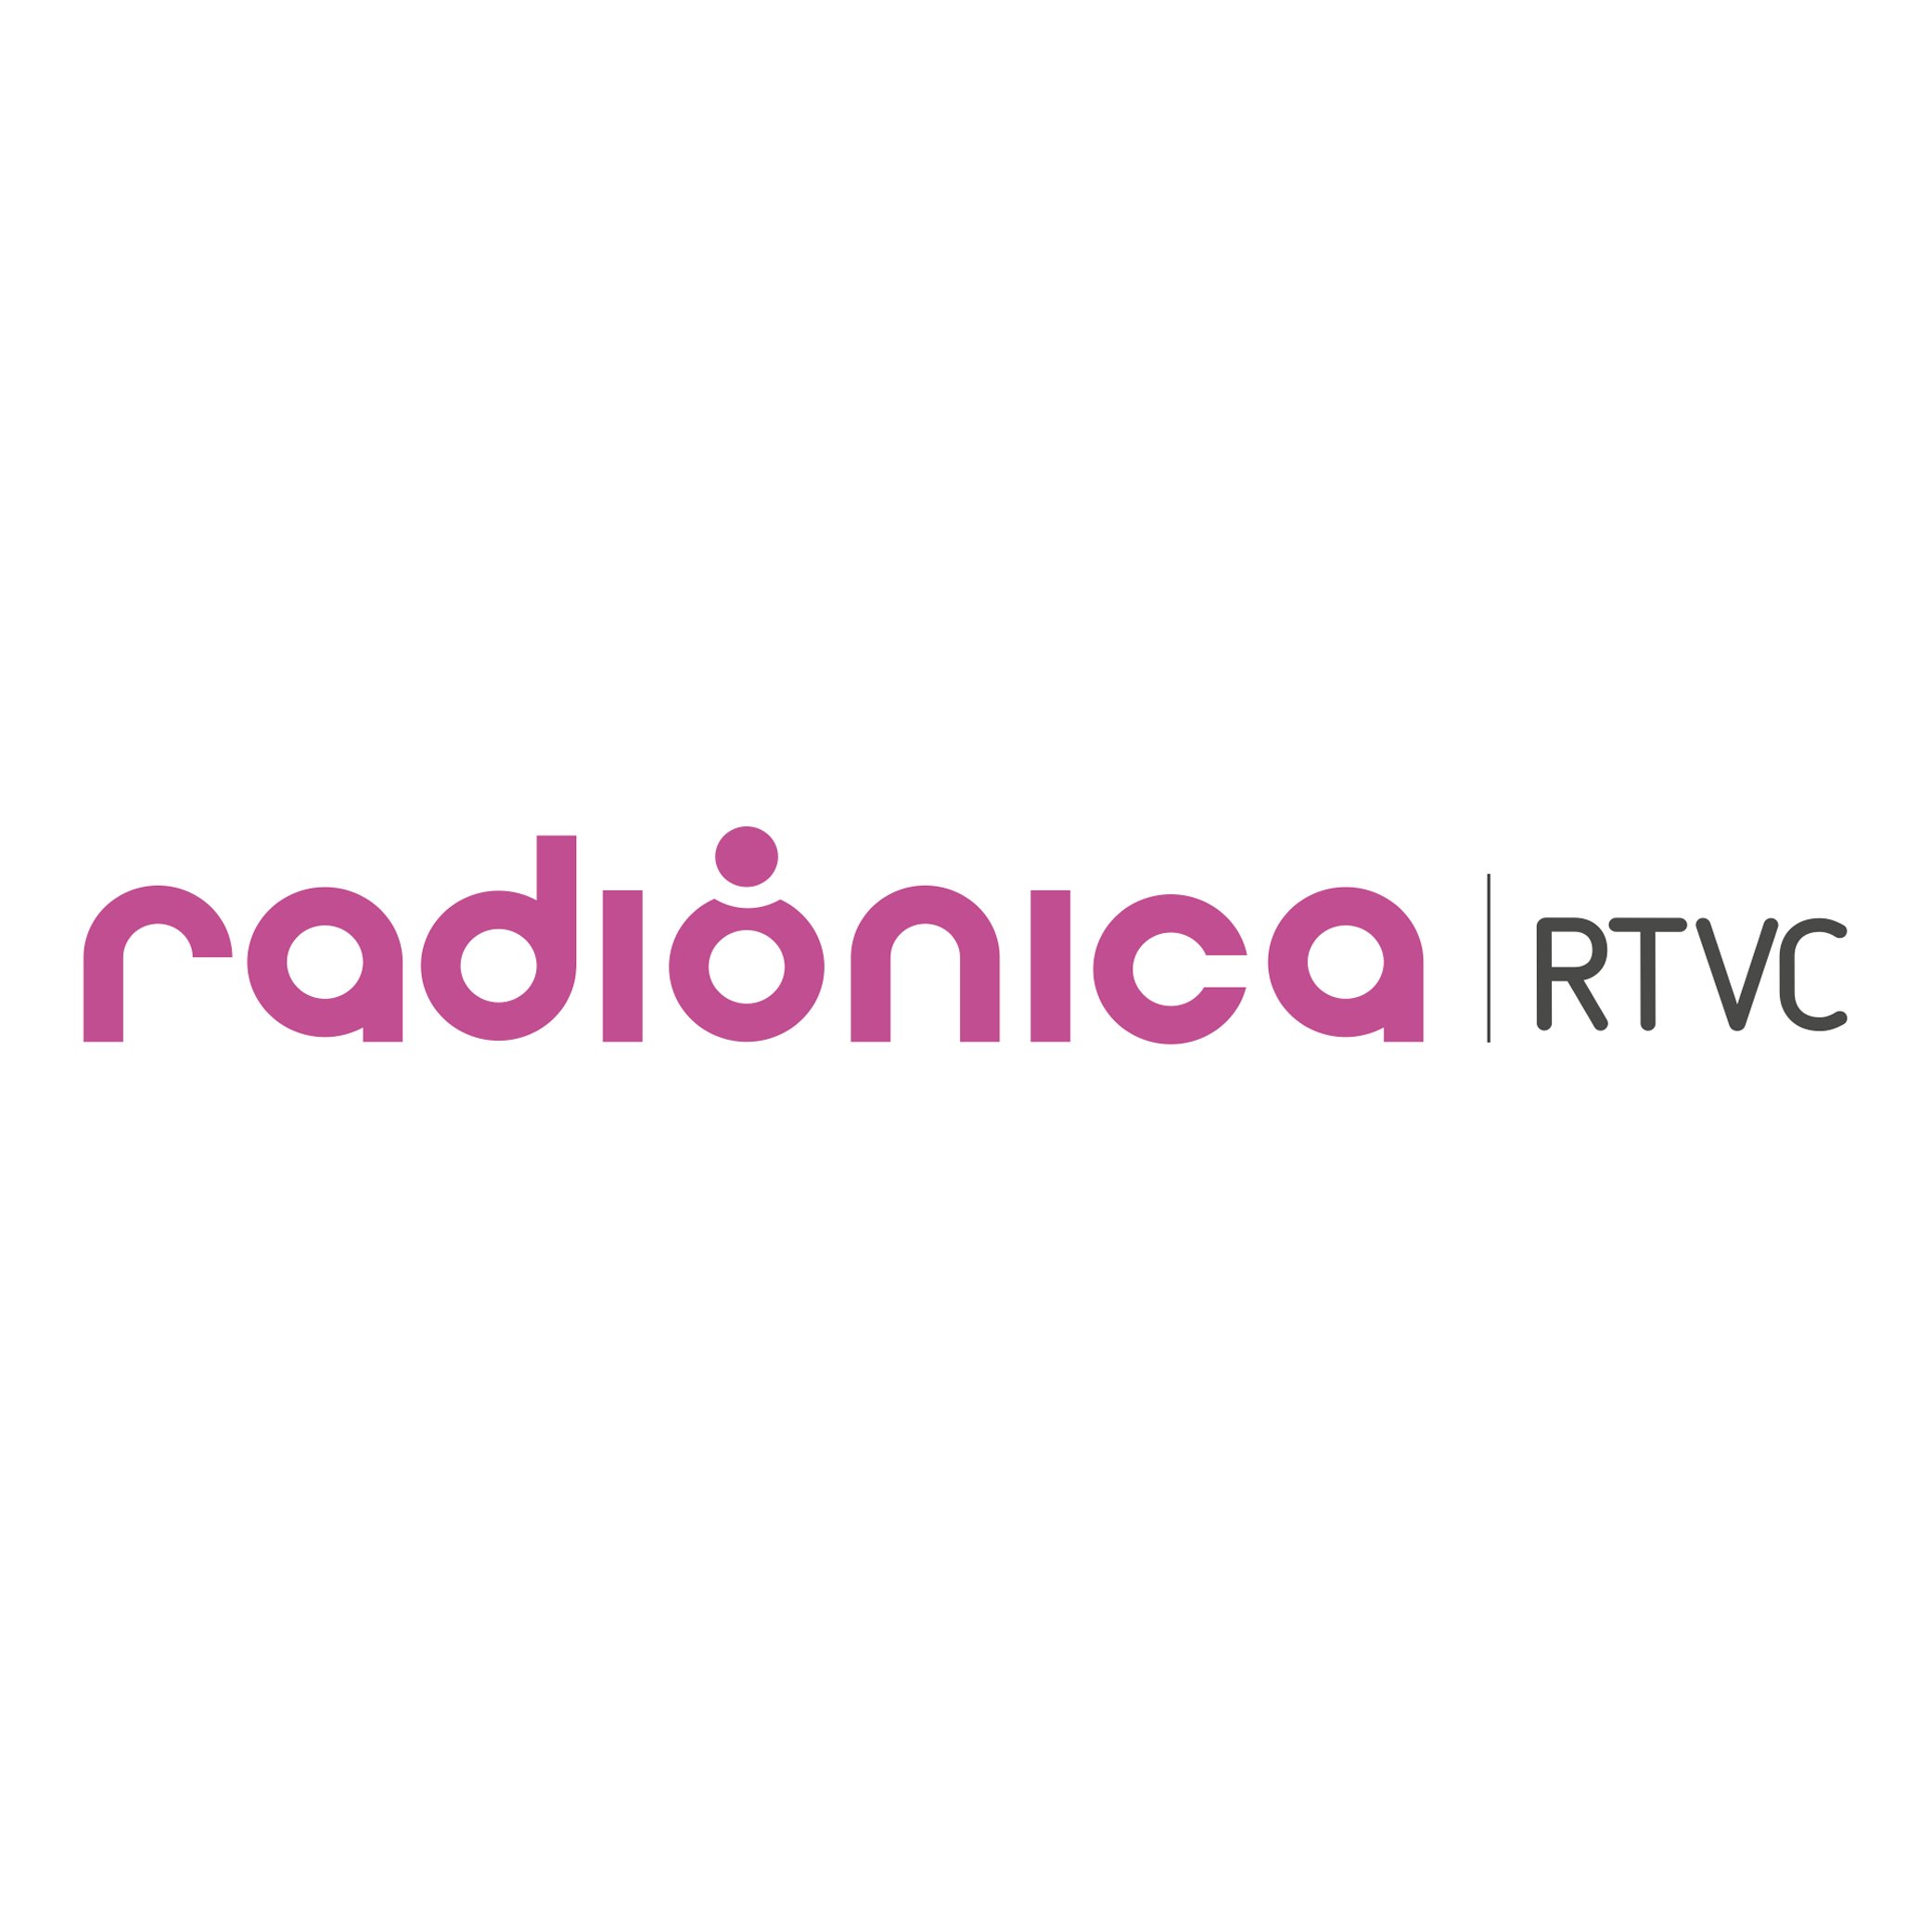 radionica_endorsment_positivo_RGB 2_crop.png